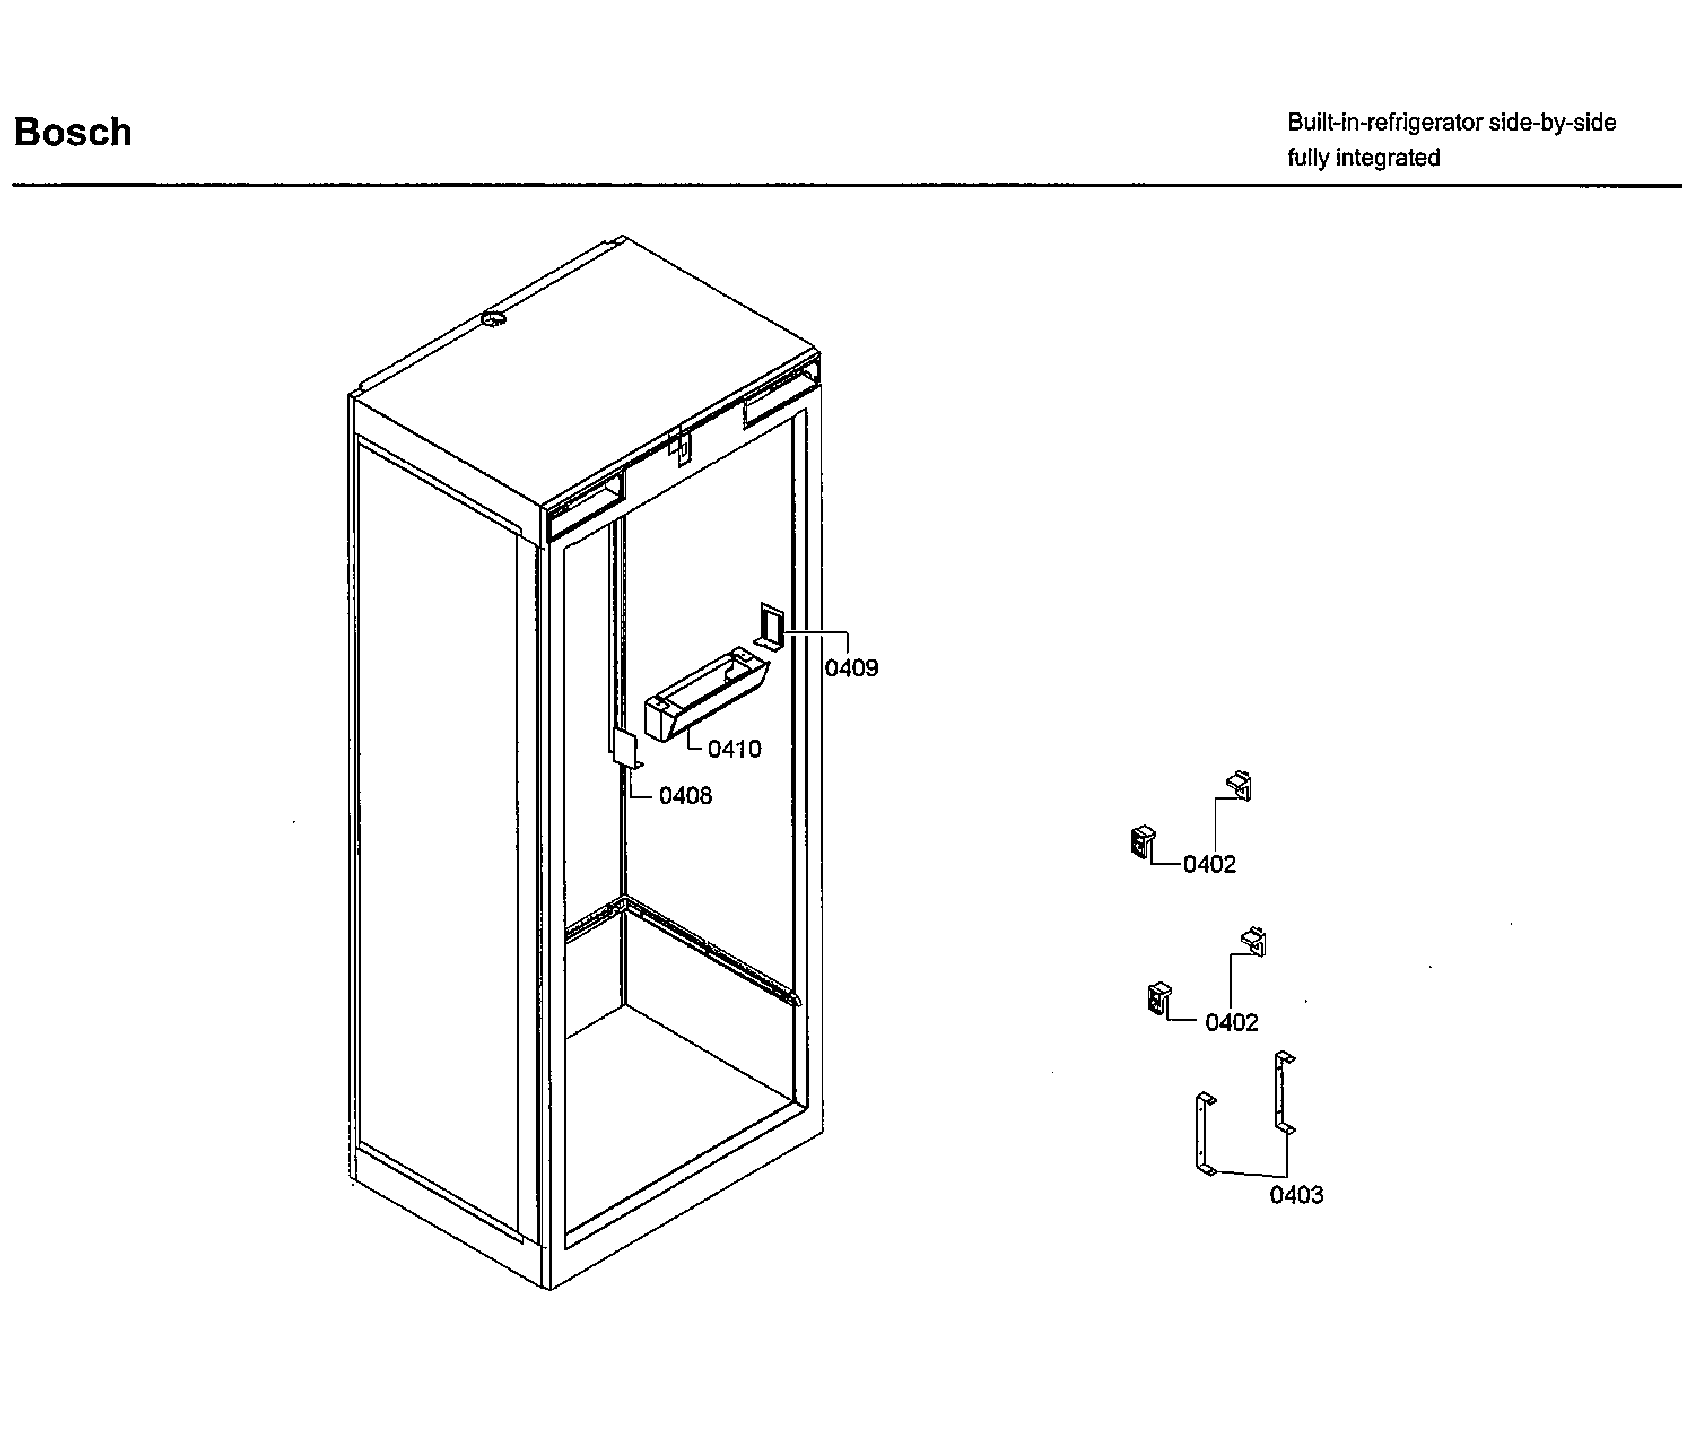 Bosch  Refrigerator   Parts